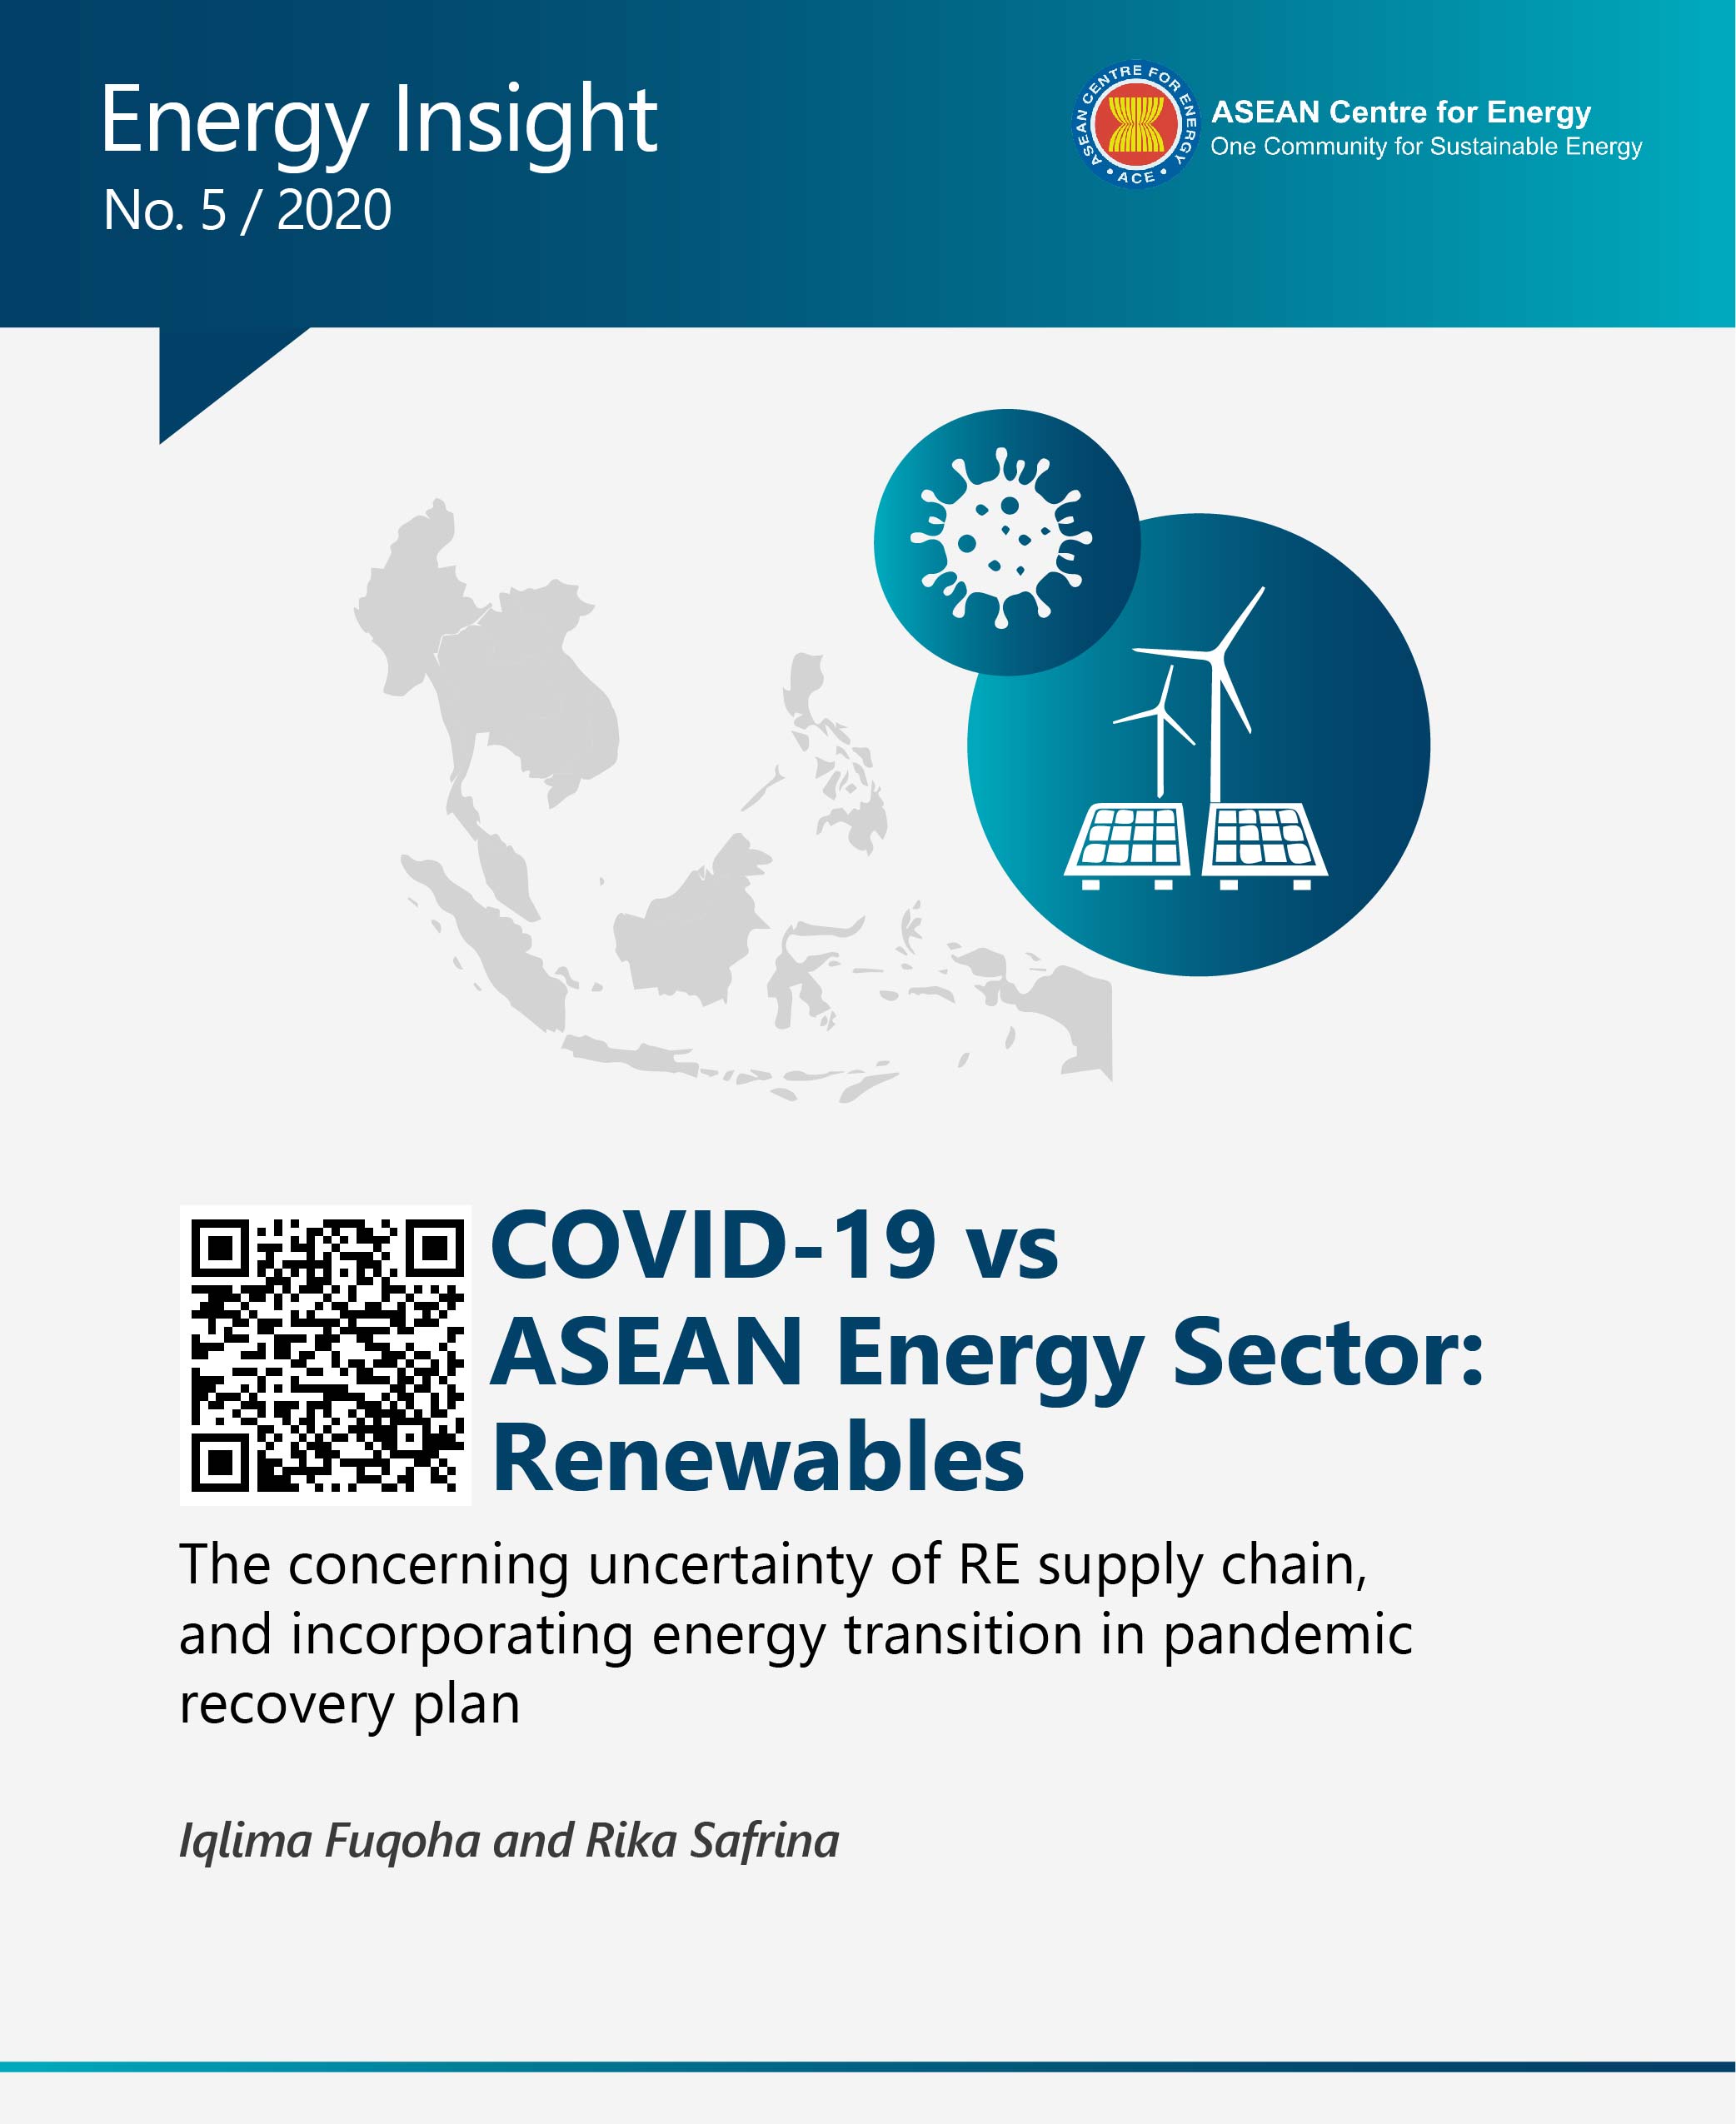 COVID 19 vs Renewables